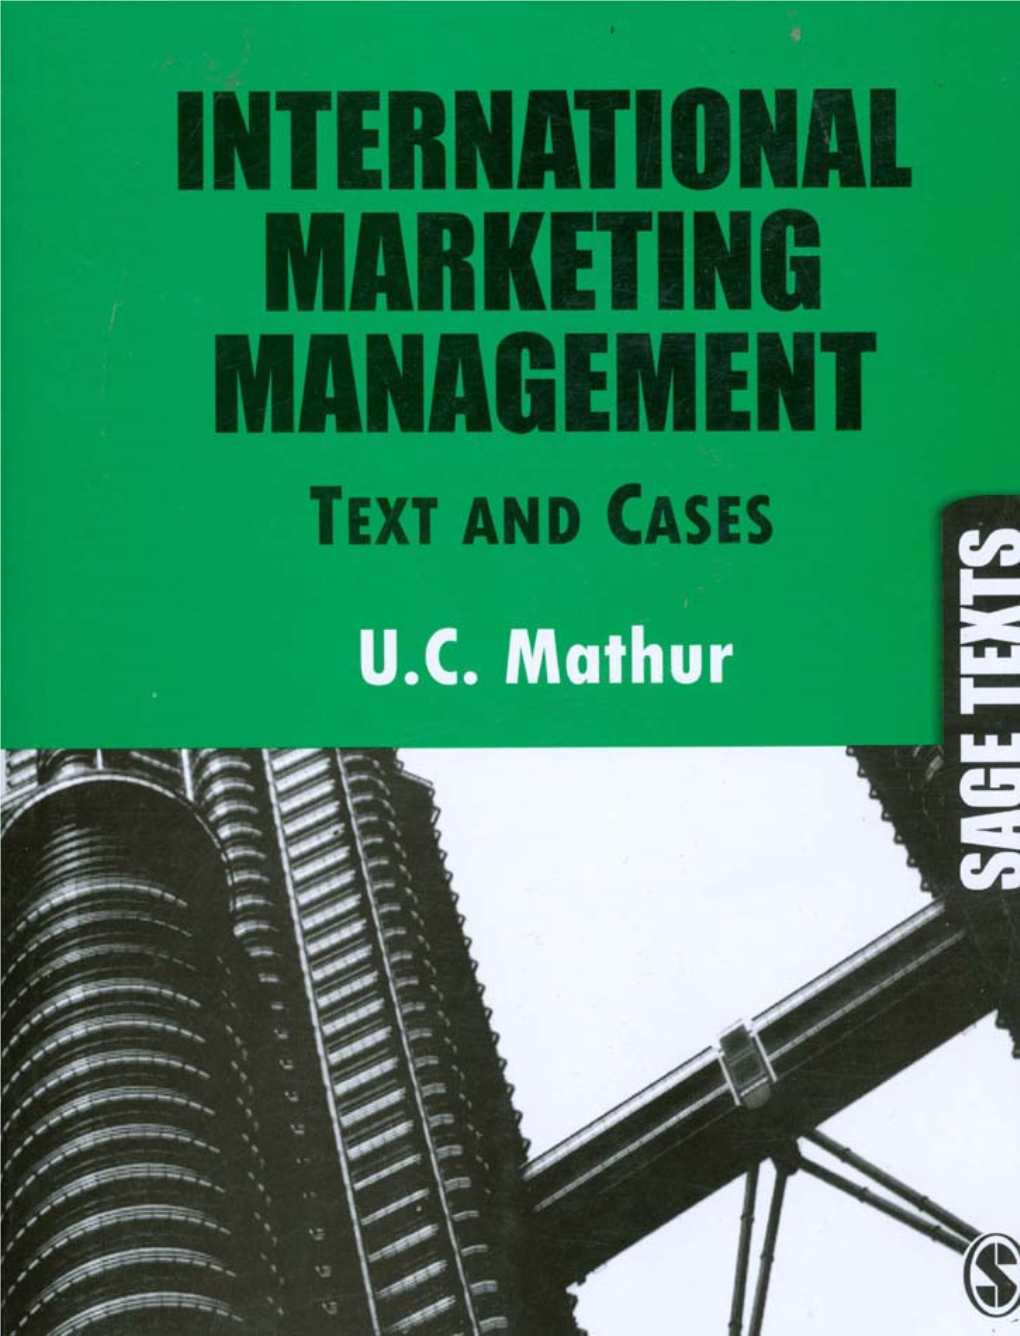 International Marketing Management: Text and Cases/U.C